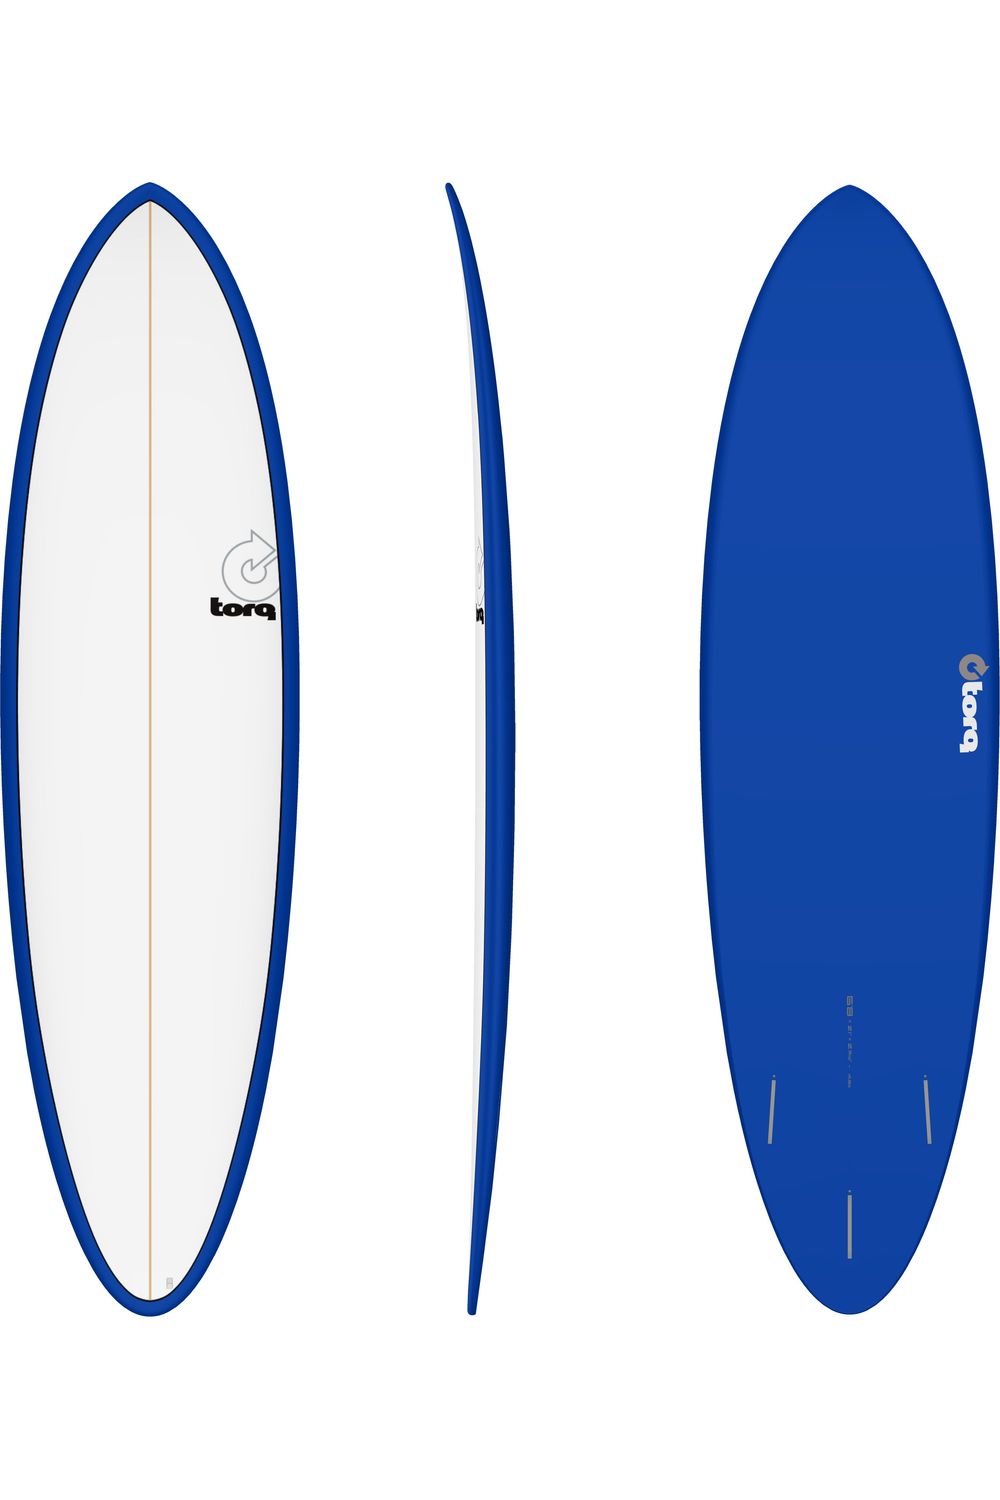 Torq TET Mod Fun Surfboard in Pinline Colour